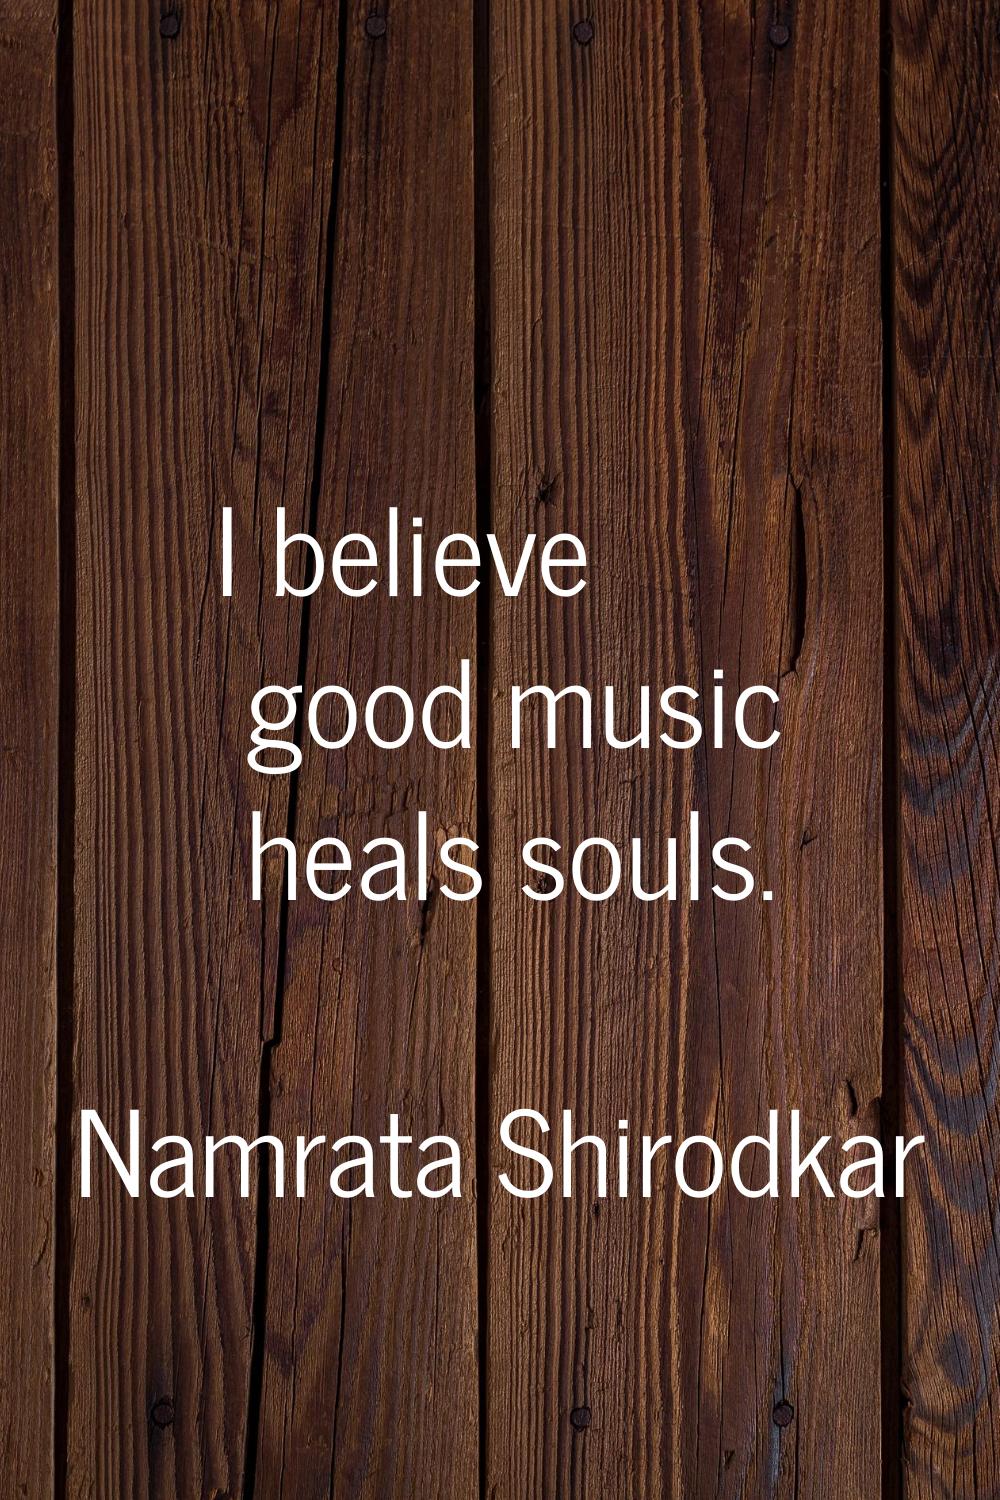 I believe good music heals souls.